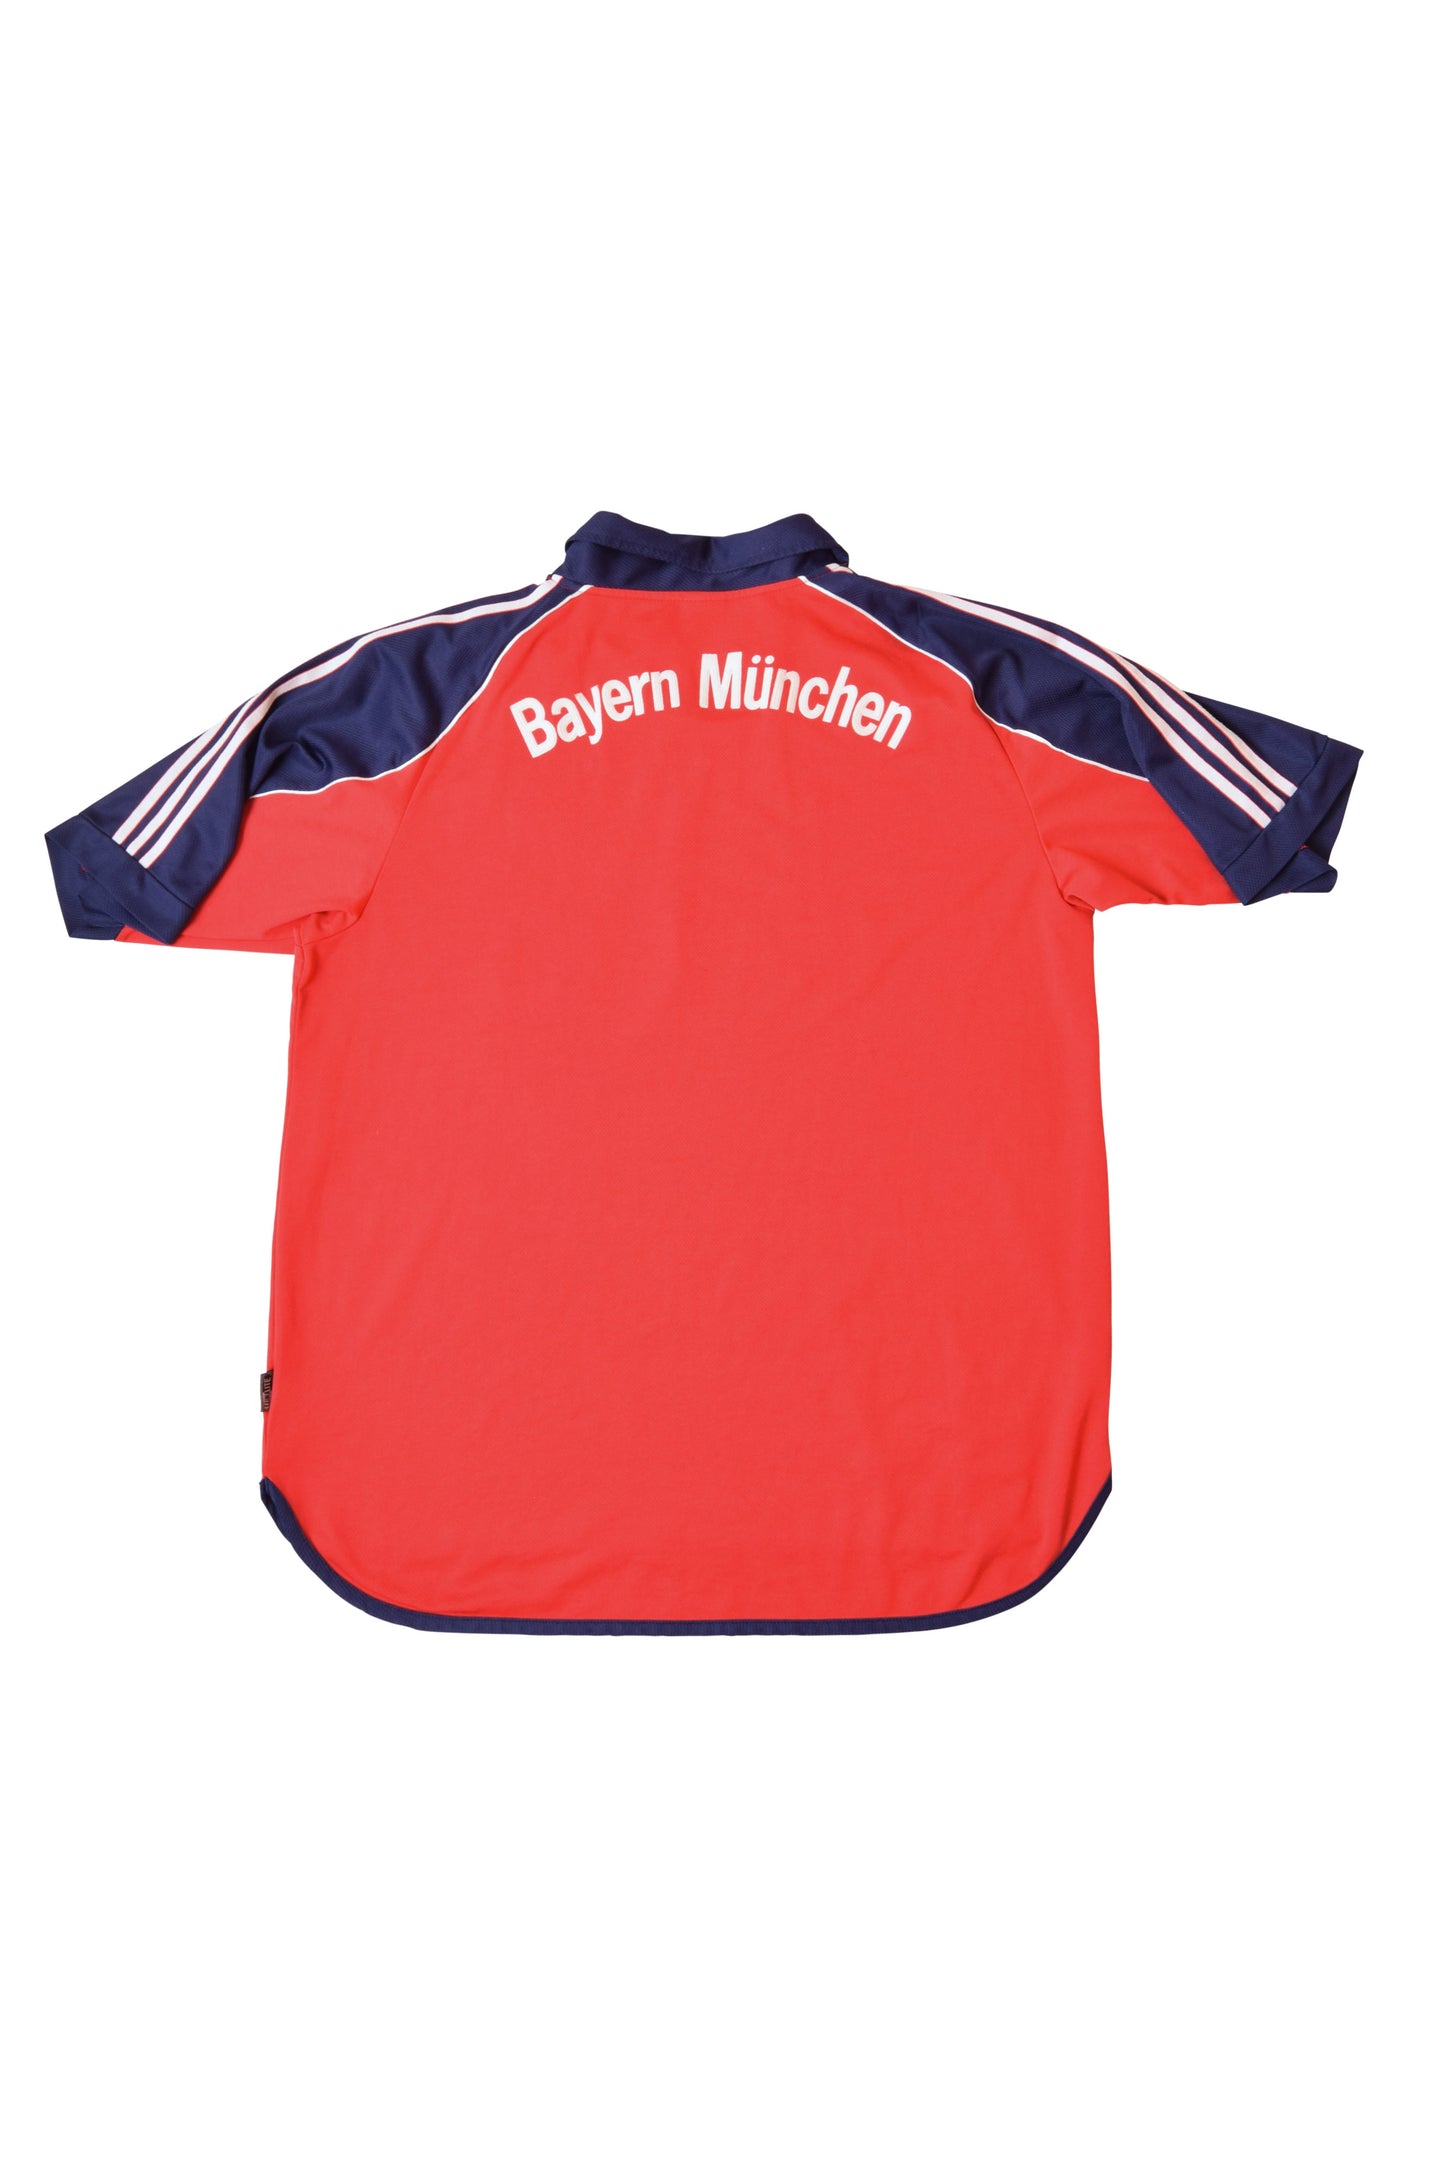 Vintage Bayern Munchen Football Shirt Home Adidas 1999 - 2001 